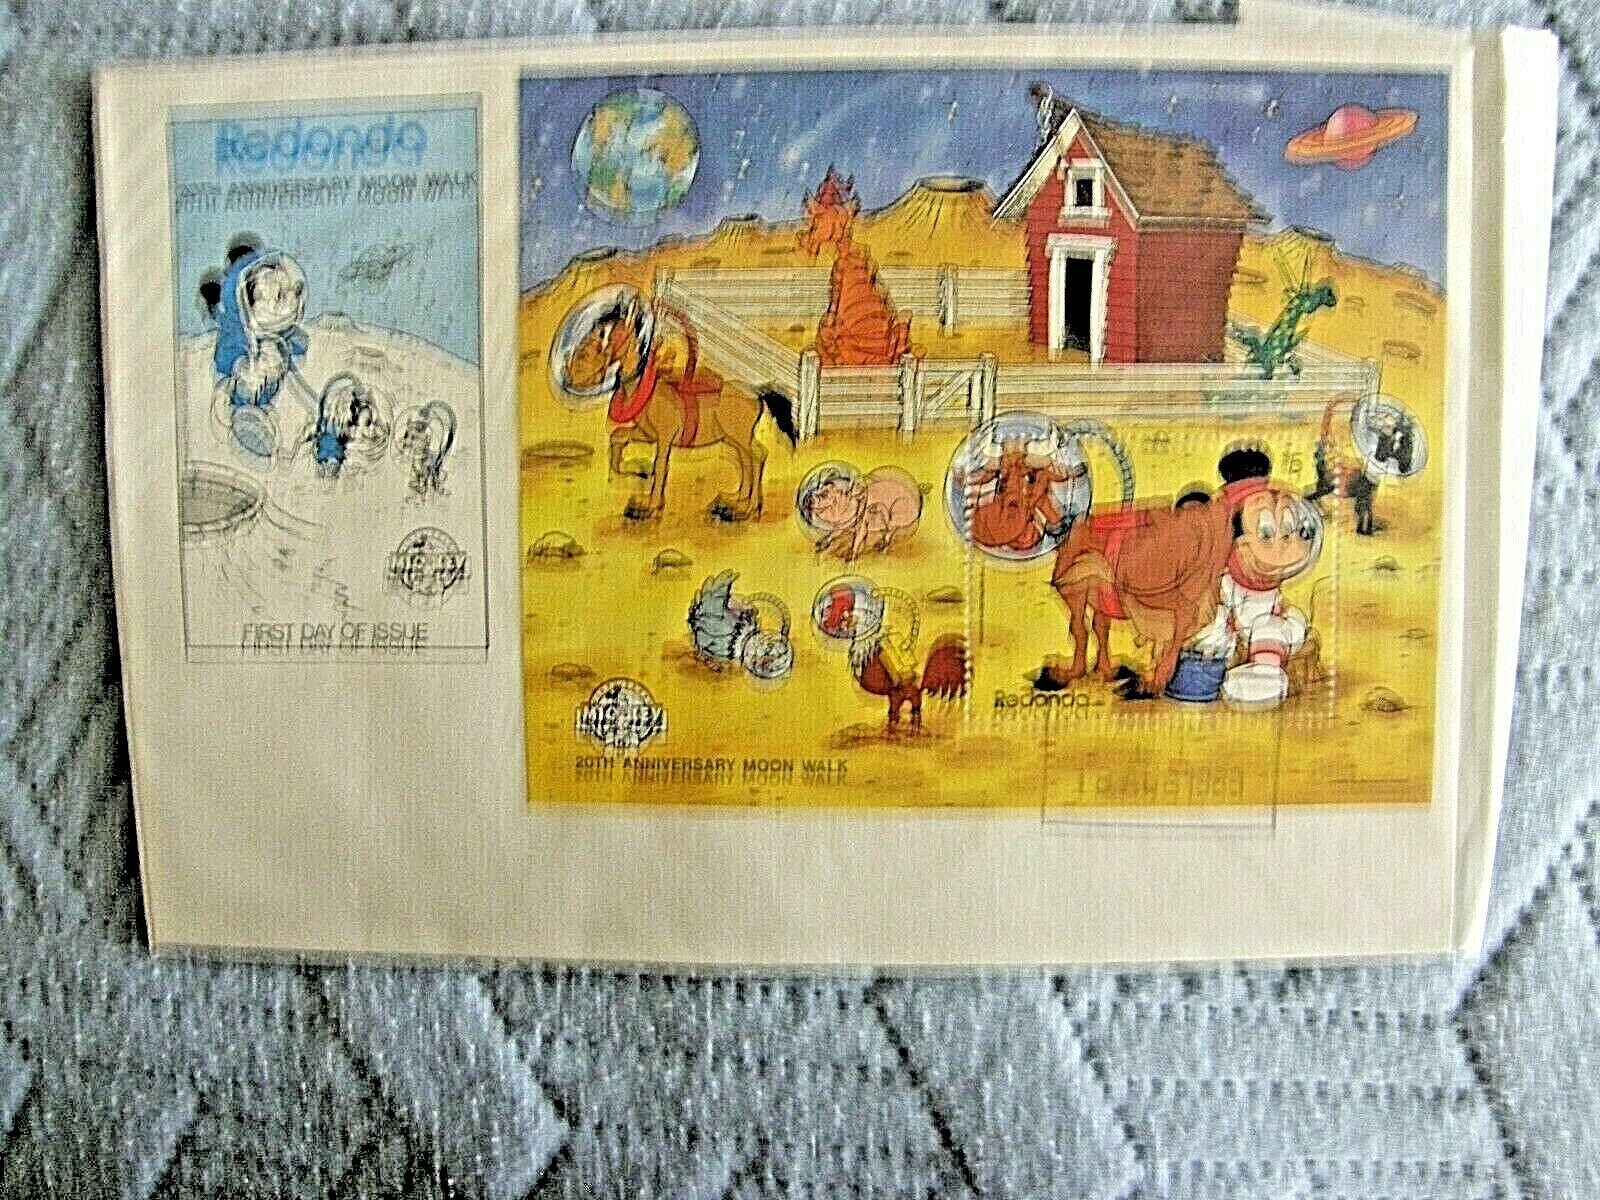 Redonda Mickey Mouse Mini Sheet Stamp on FDC, 20th Anniversary Moon Walk, $5 Без бренда